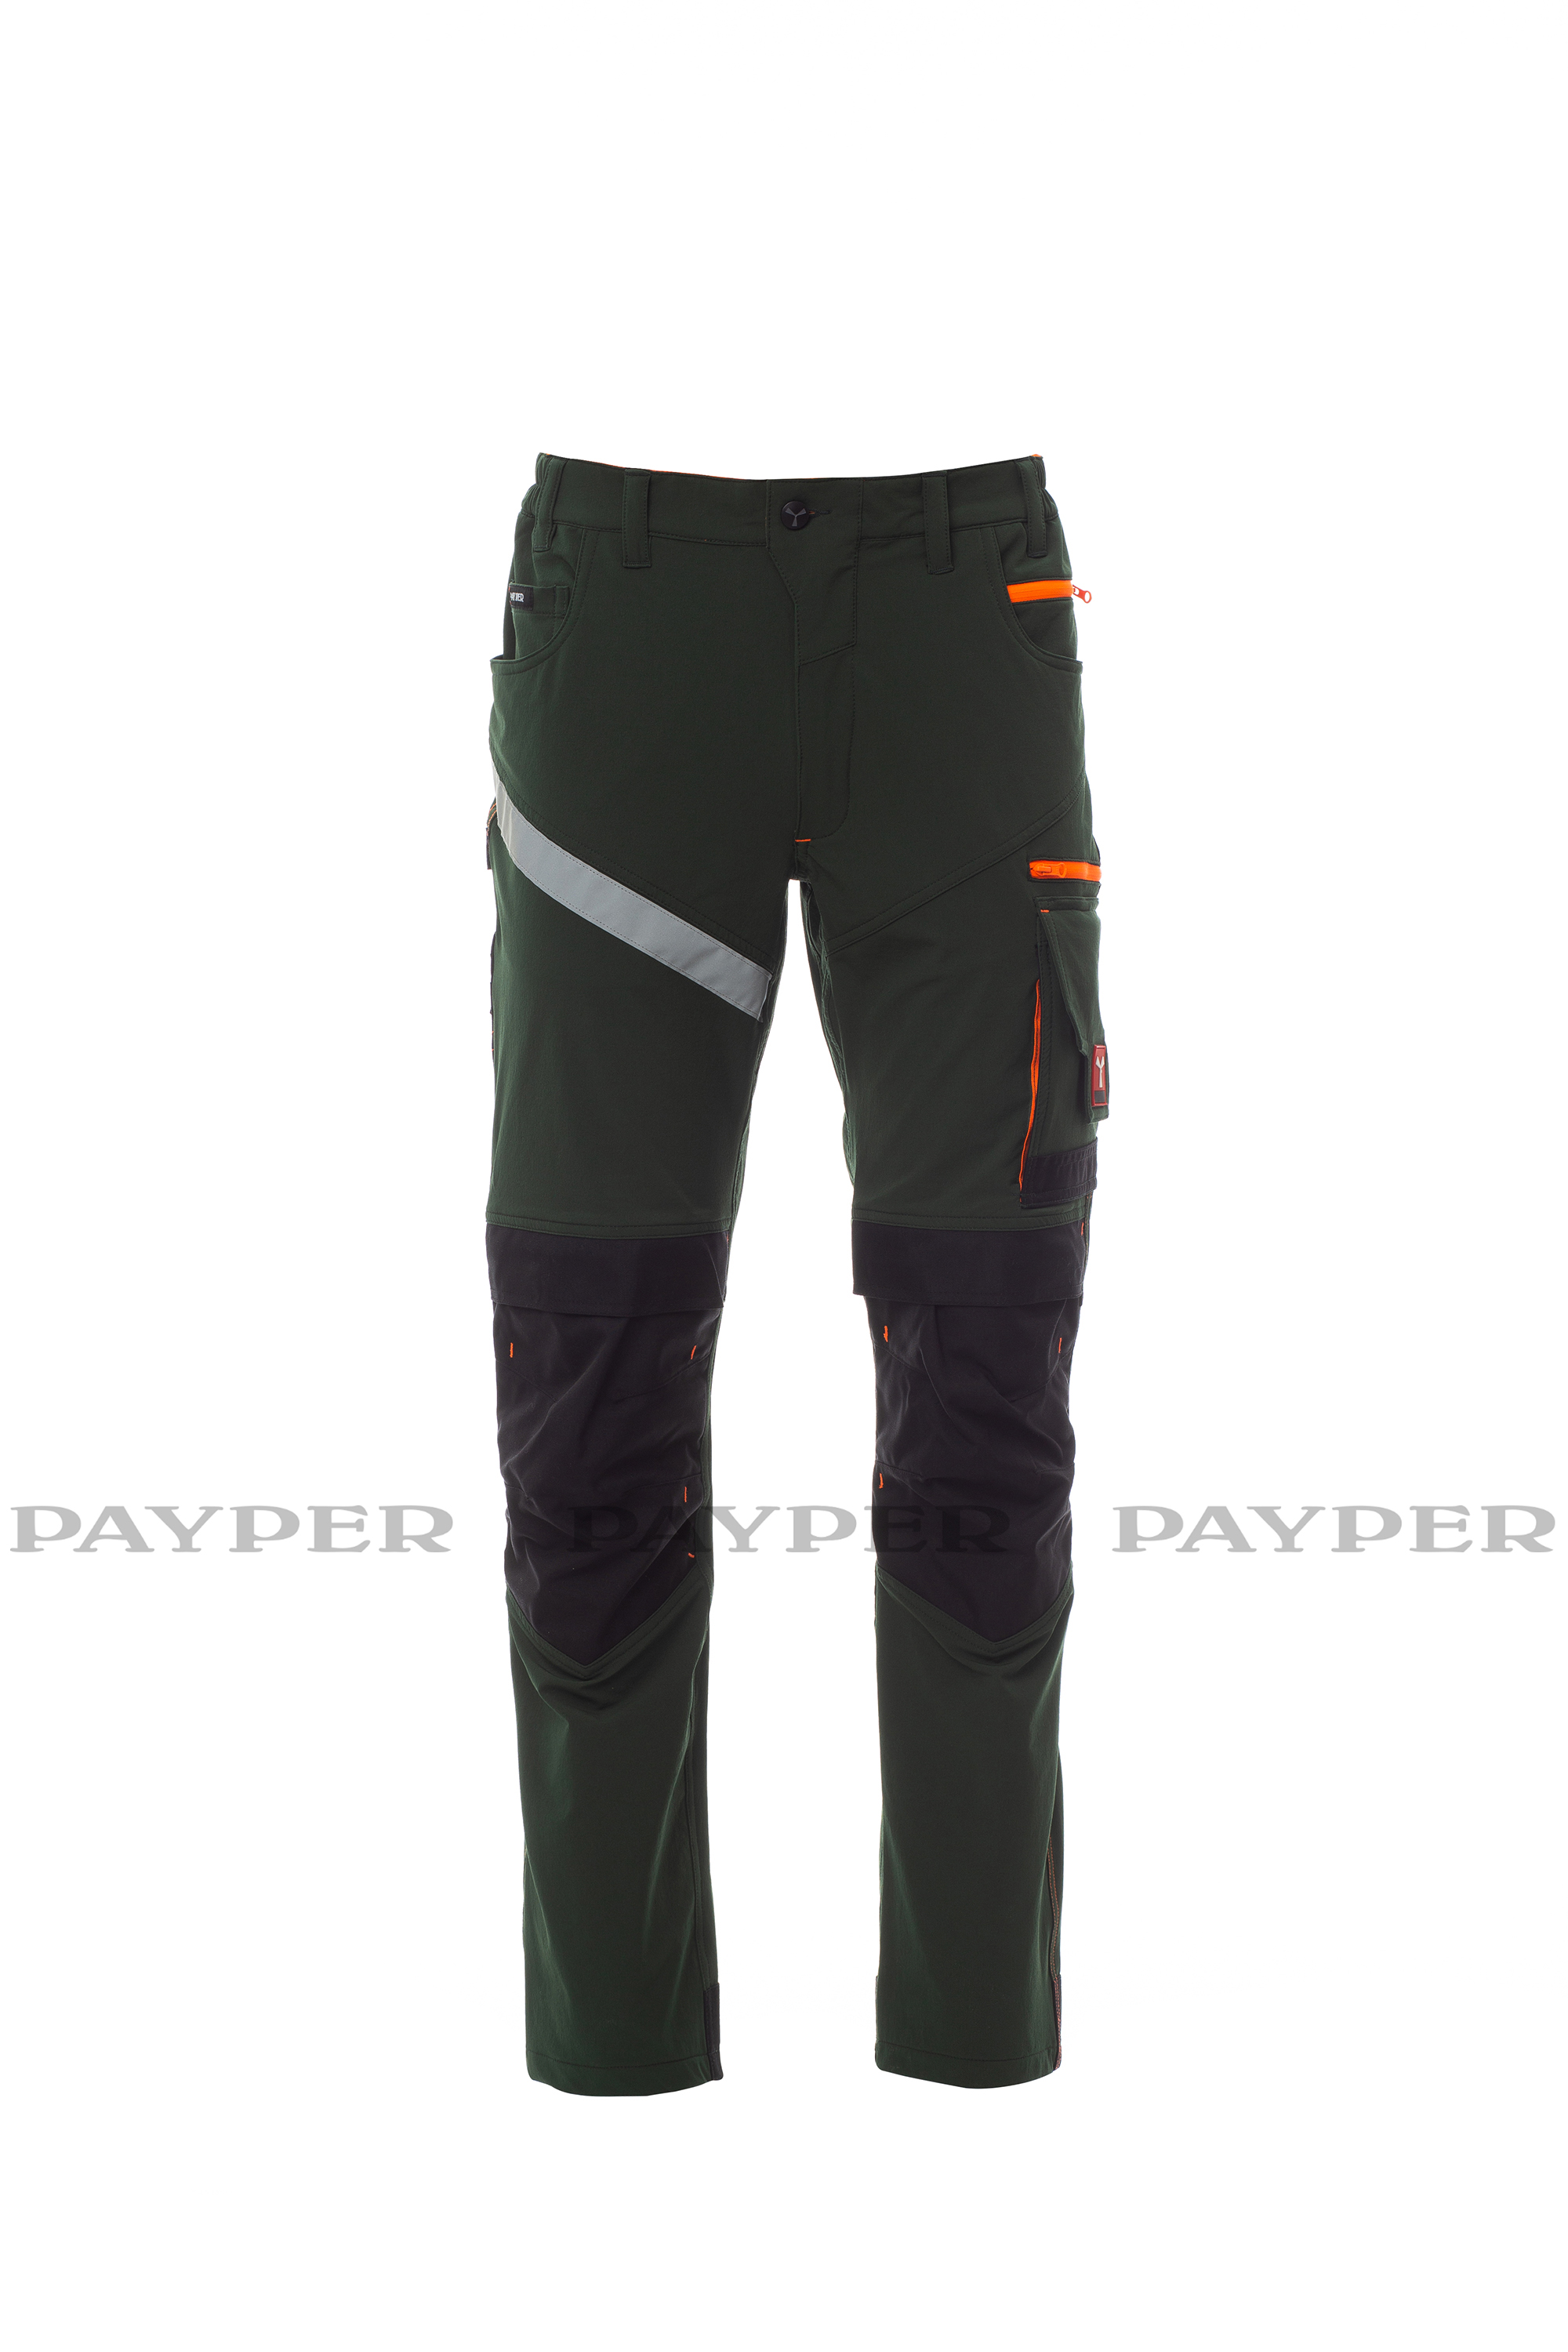 Kalhoty NEXT 4W Payper zelené Velikost: 42